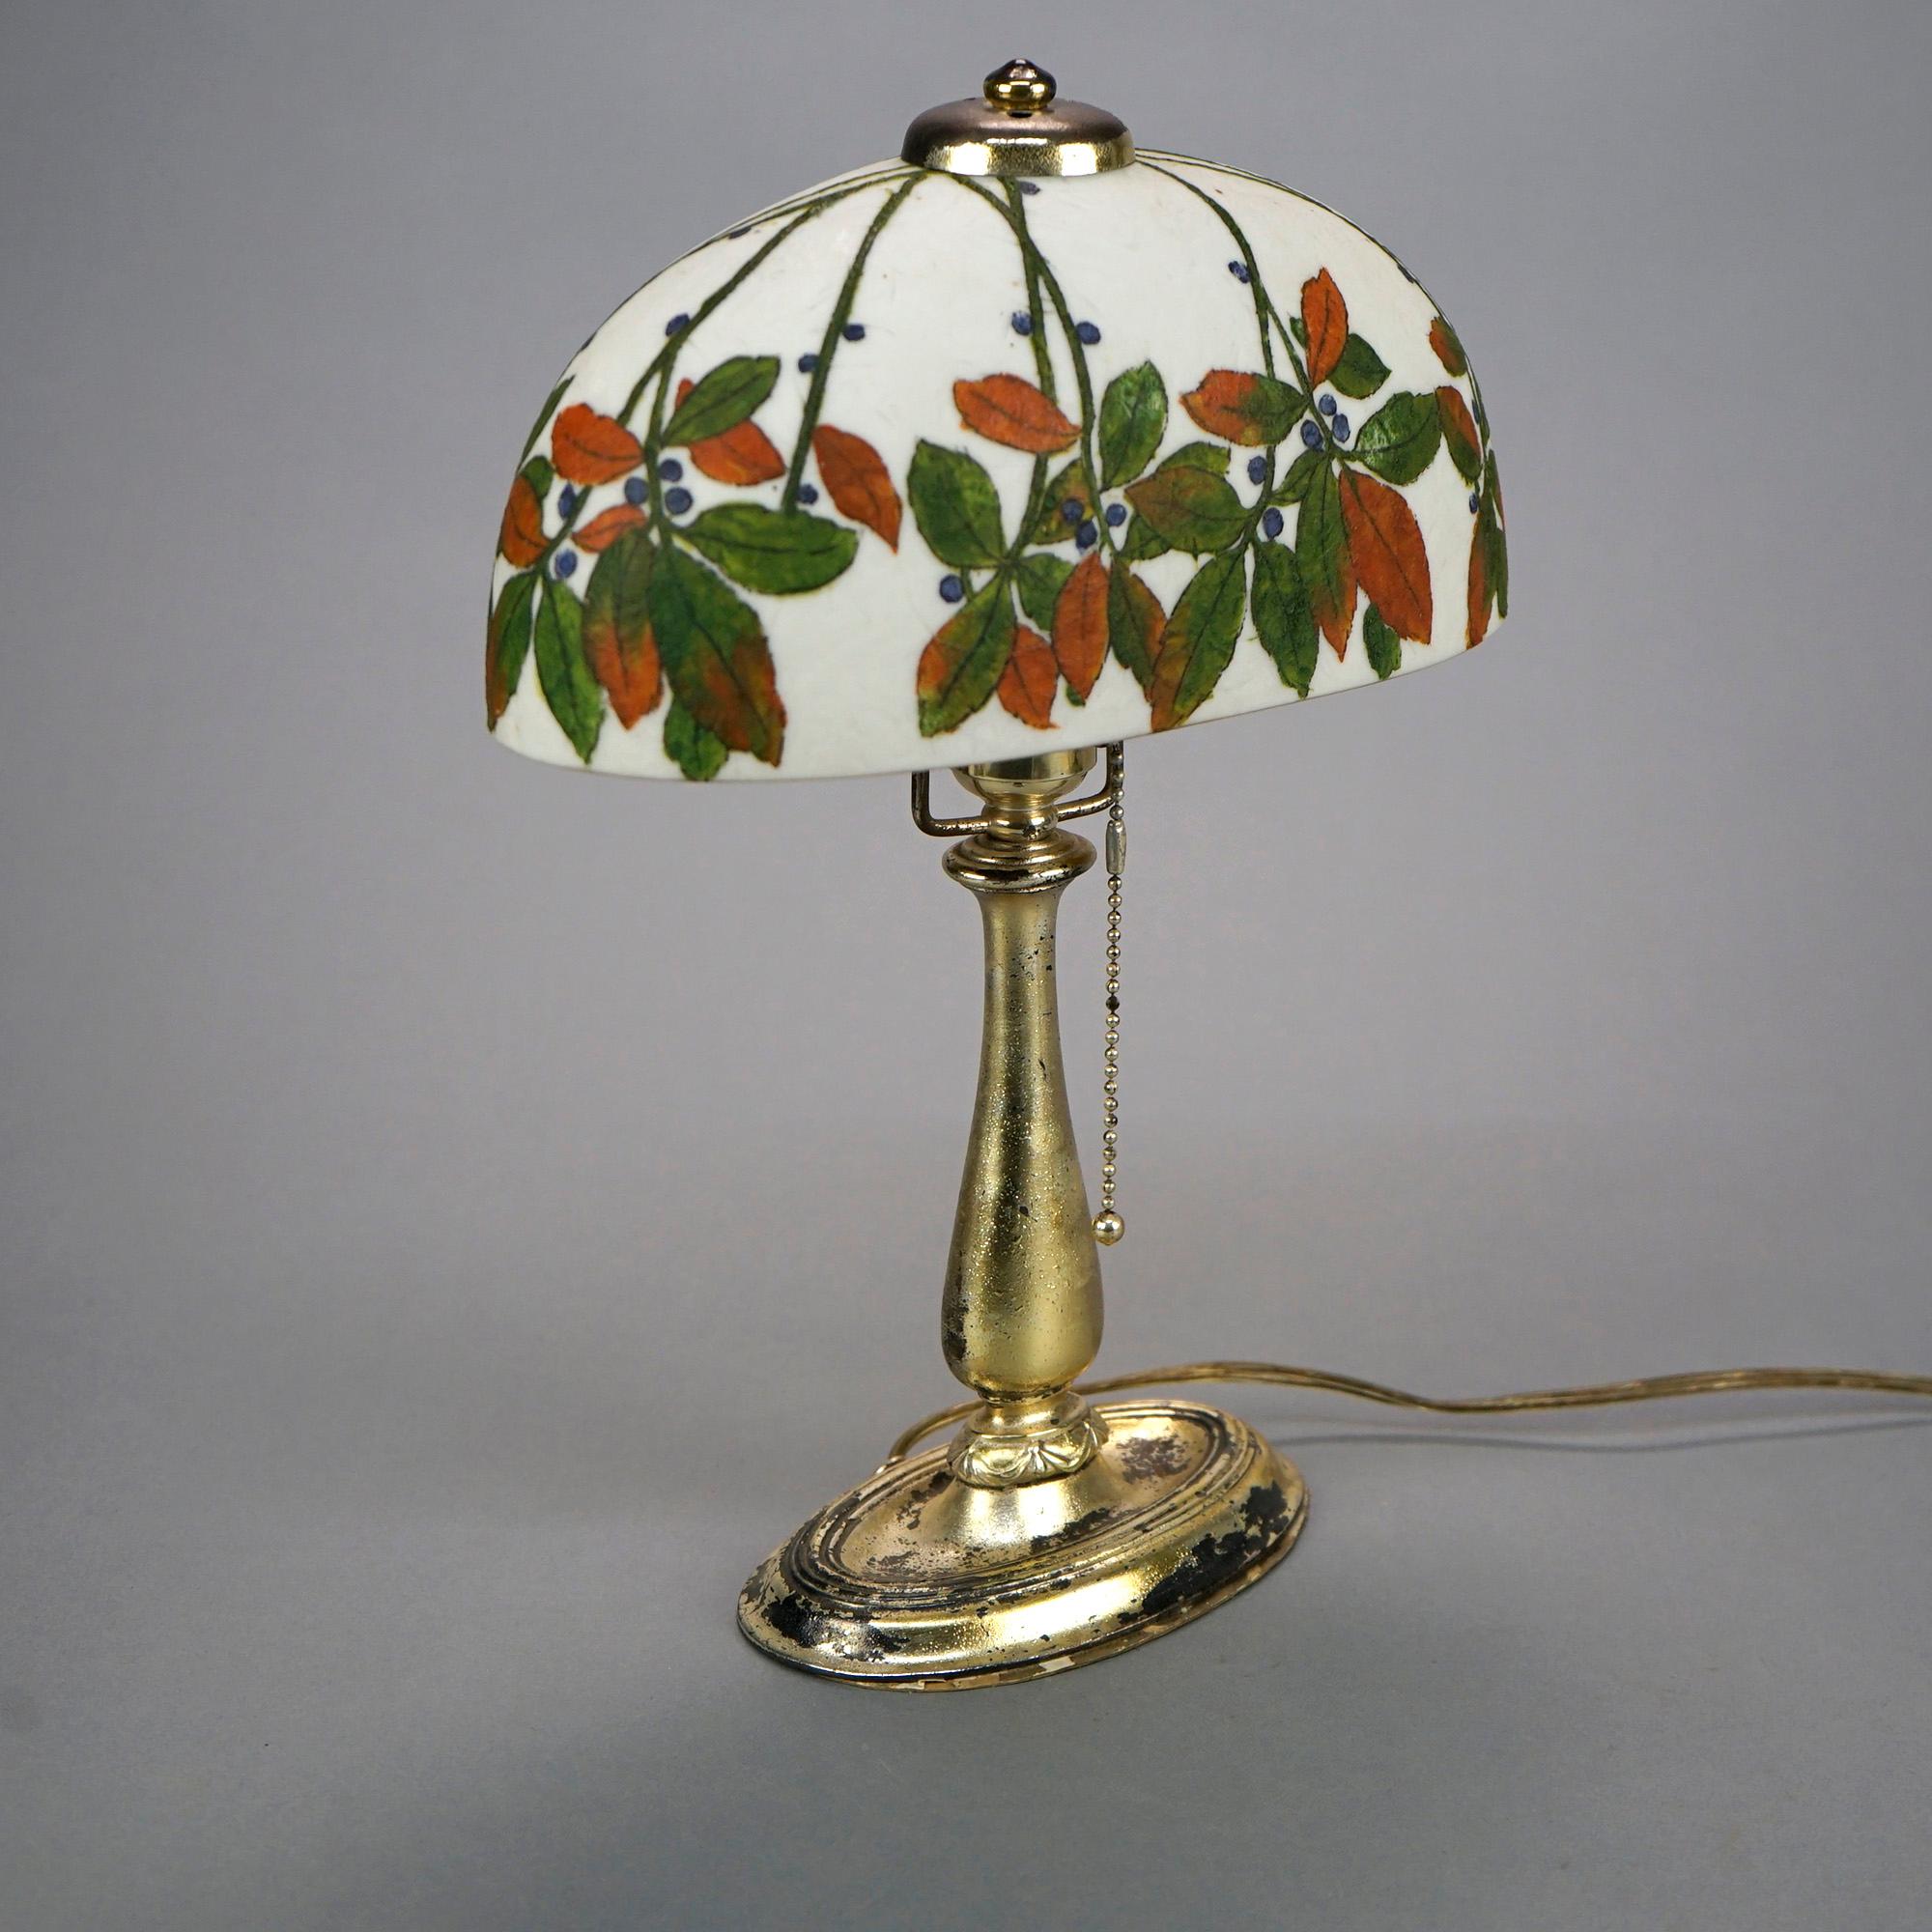 20th Century Rare Antique Handel Oval Leaf & Berry Shade Boudoir Lamp, Signed, c1920